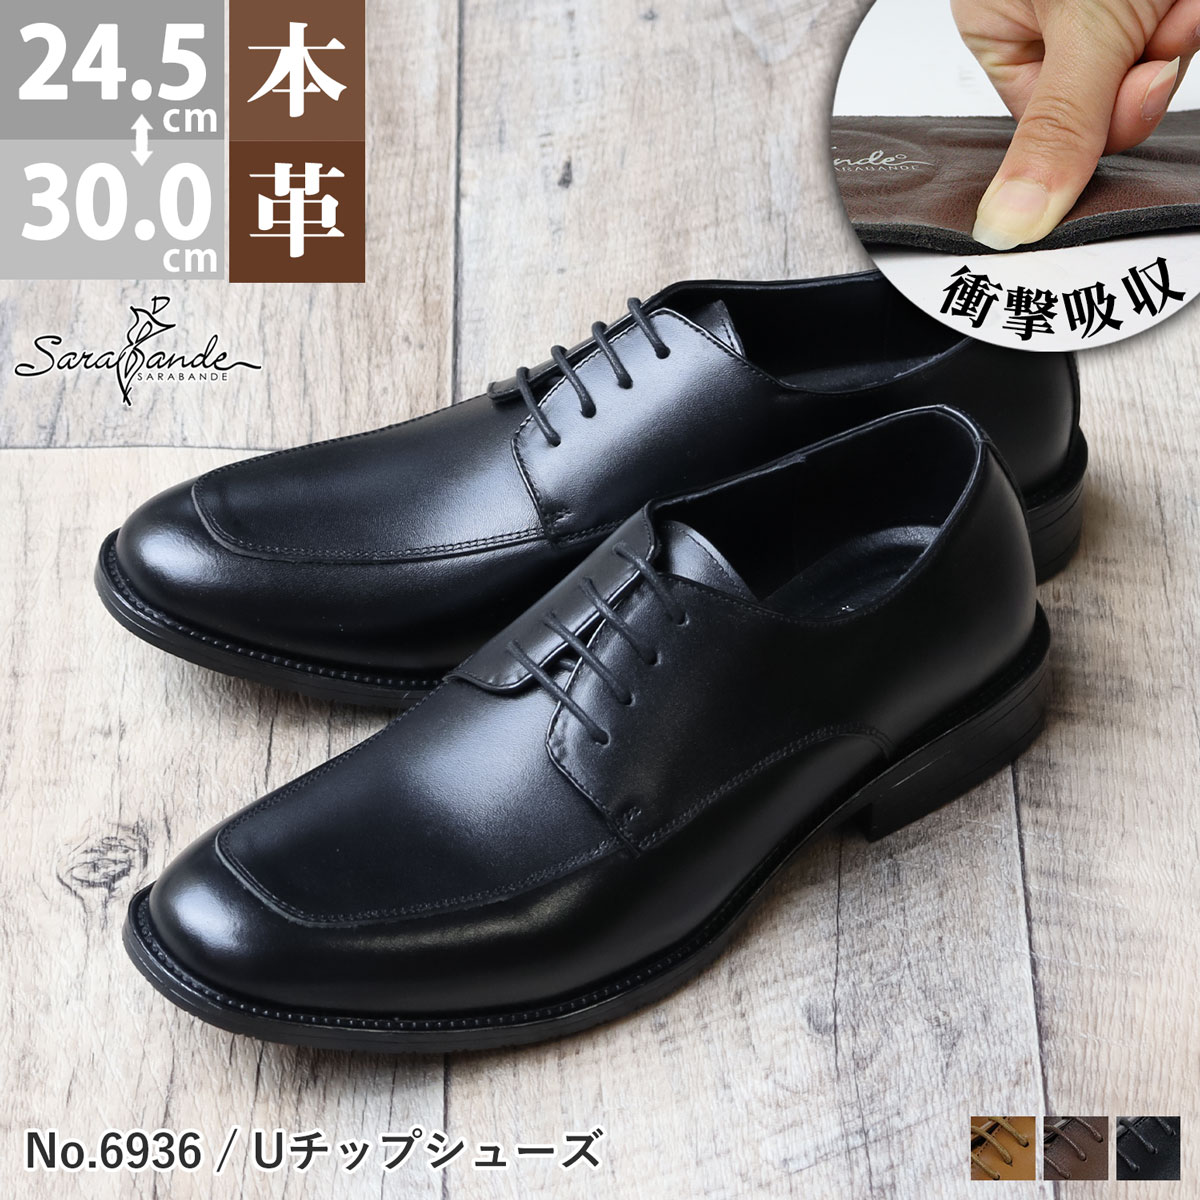 20％OFF【セール】ビジネスシューズ 本革 革靴 レザー クッションインソール 防滑 雨 3E 歩きやすい 履きやすい メン…